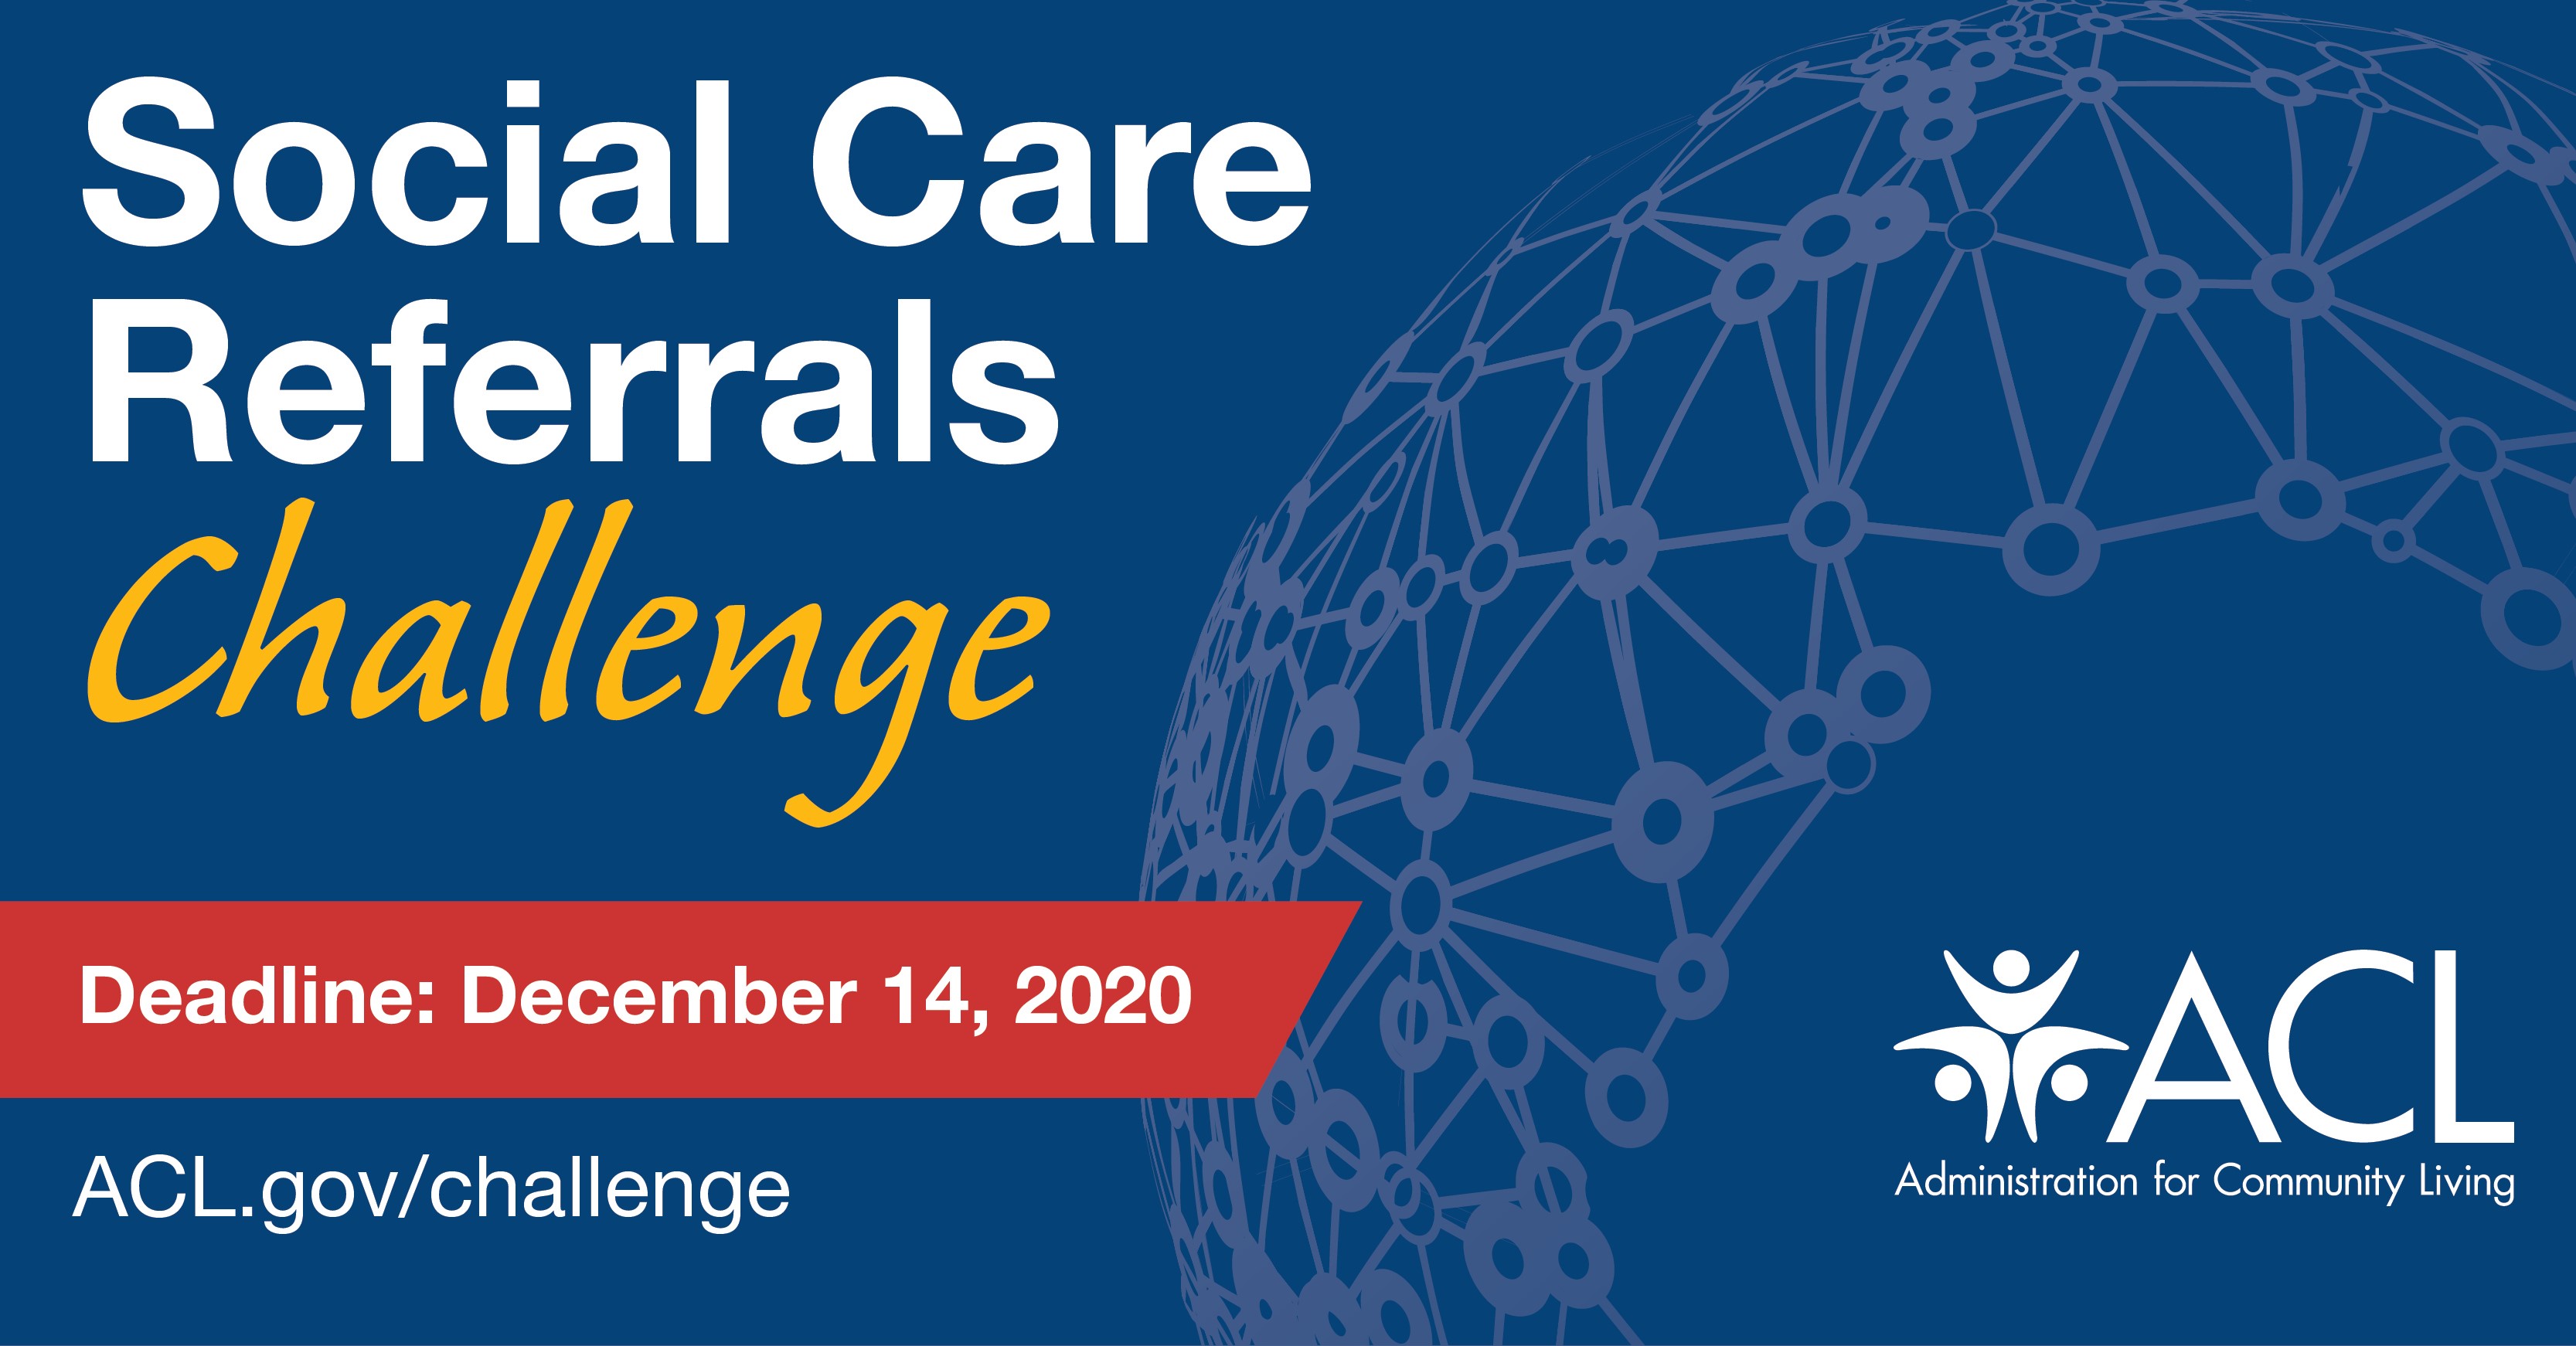 Social Care Referrals Challenge Deadline December 18